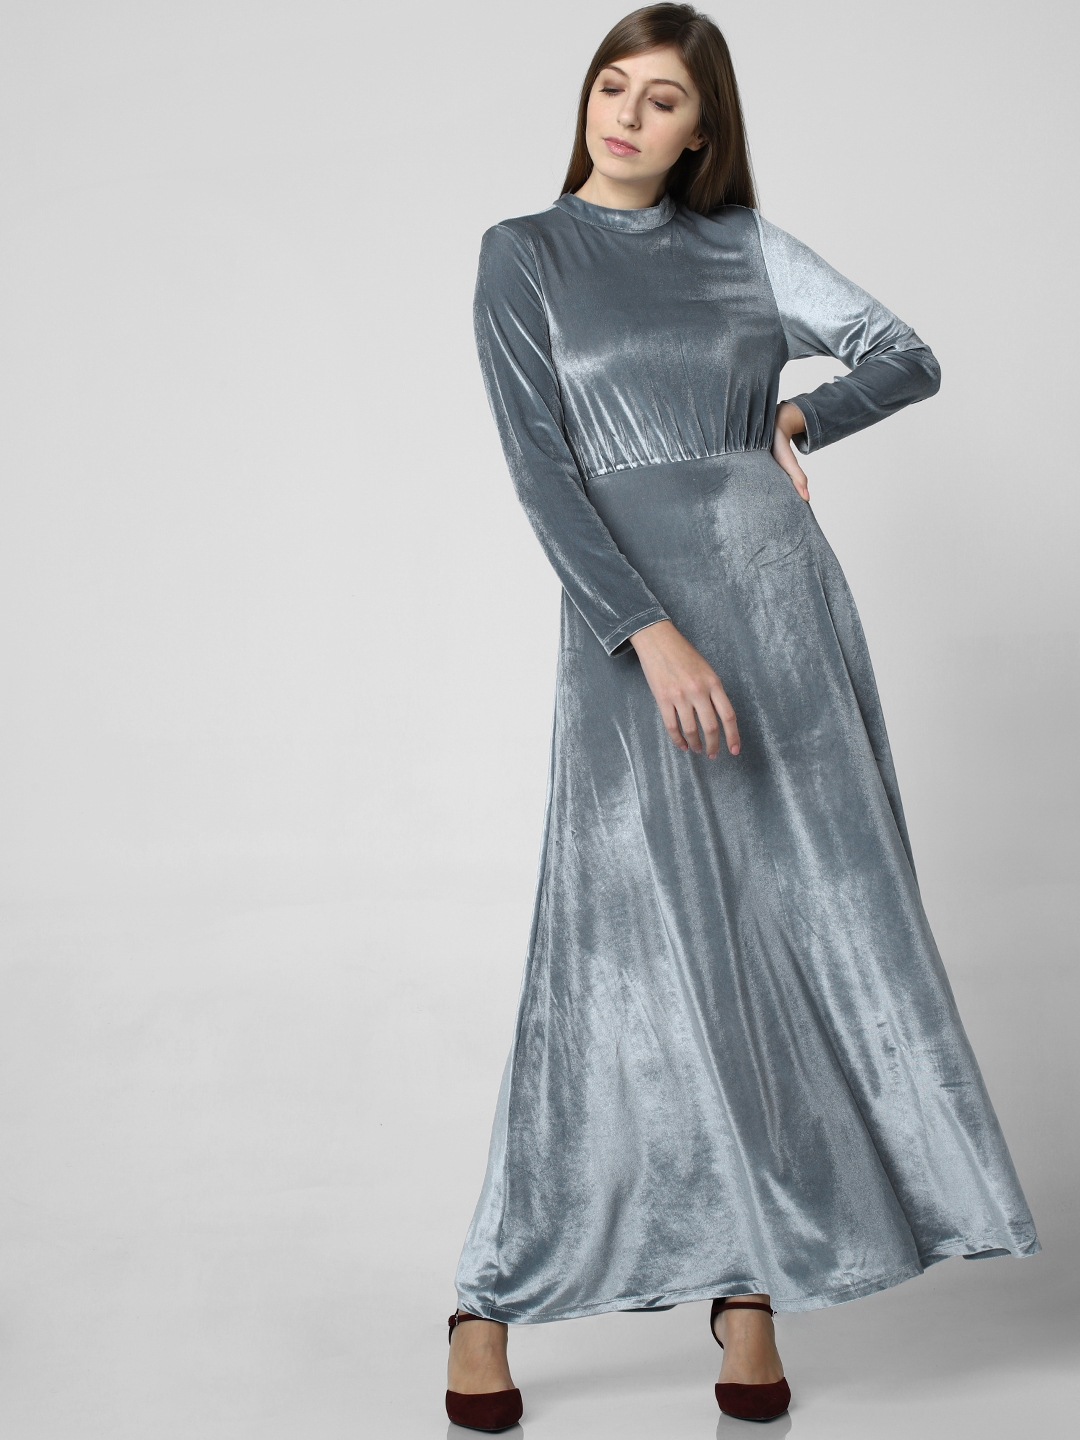 Vero Moda Blue Solid Maxi Dress - Dresses for Women 10936674 |